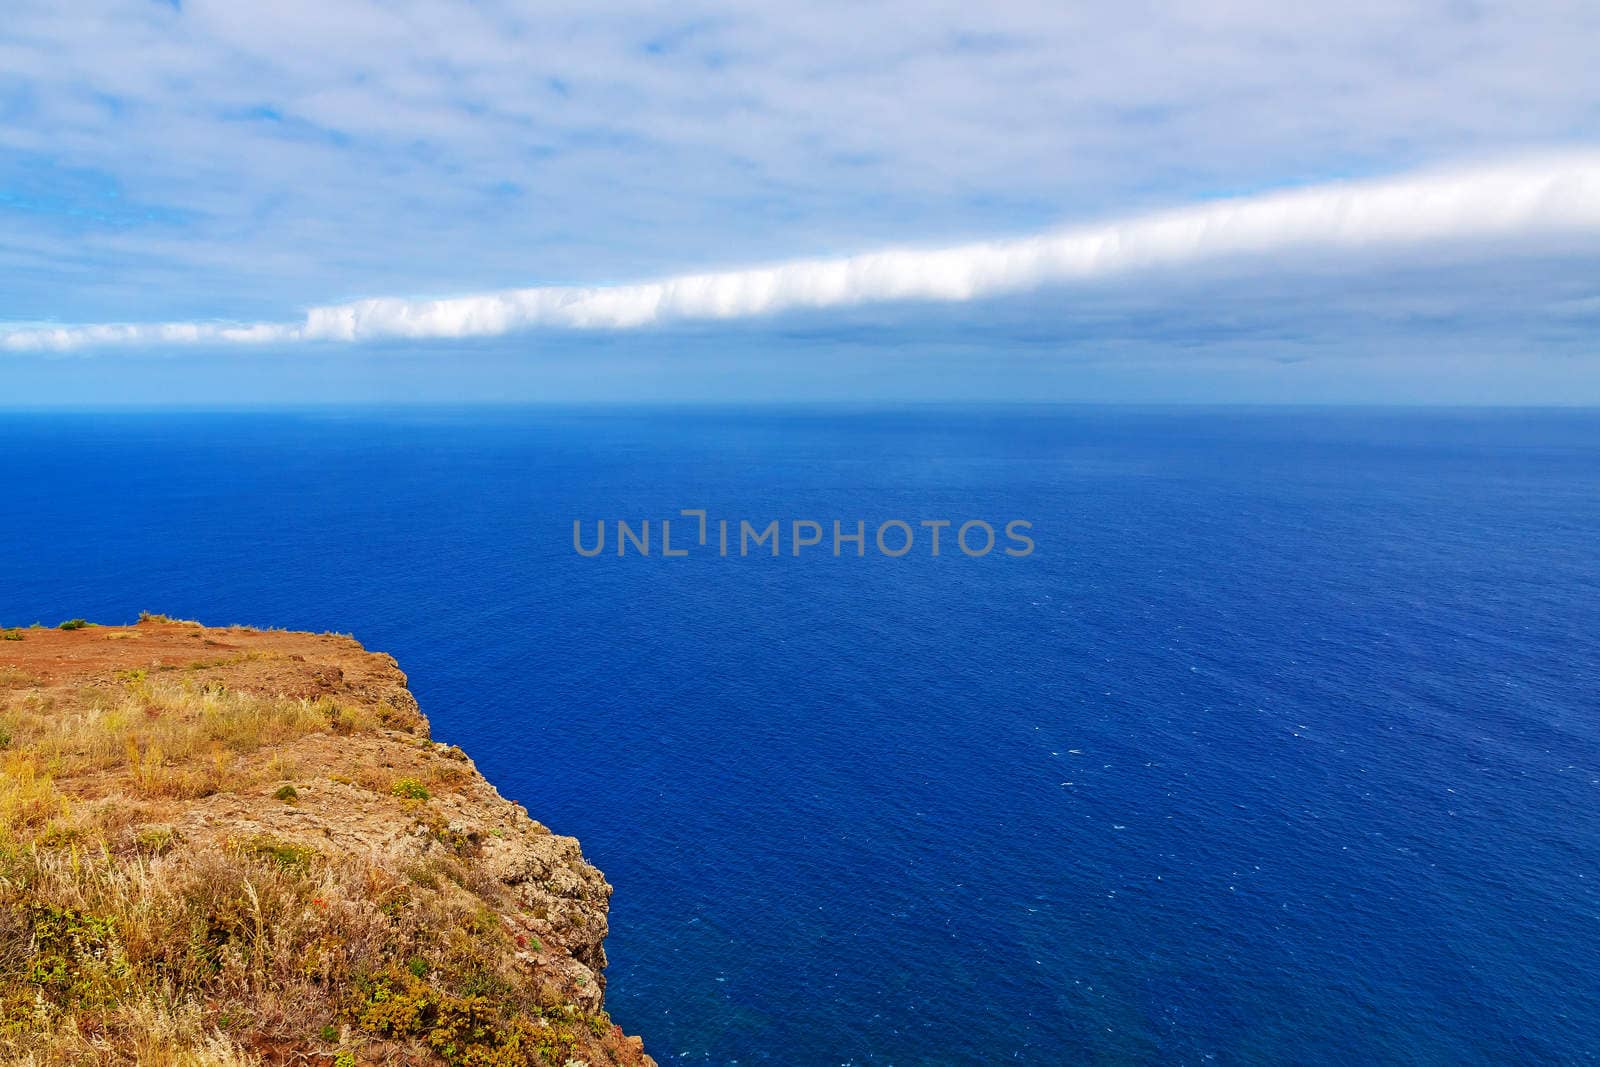 Madeiras westermost point - Ponta do Pargo - view of the deep blue Atlantic Ocean, unique cloud formation